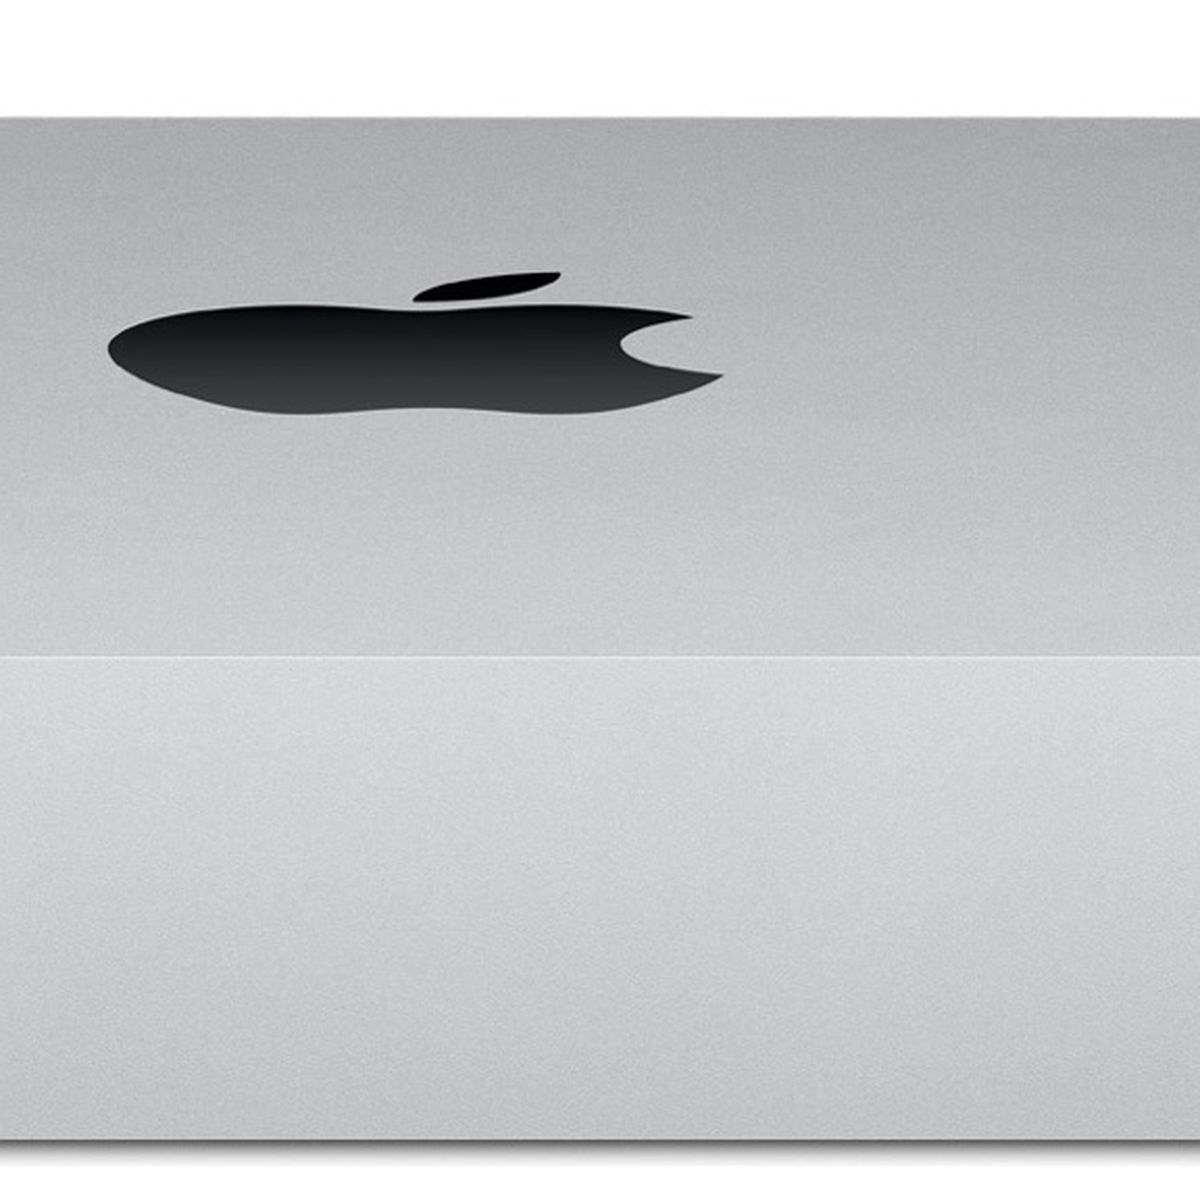 Mac mini: Apple M2 and M2 Pro Chips, Starts at $599